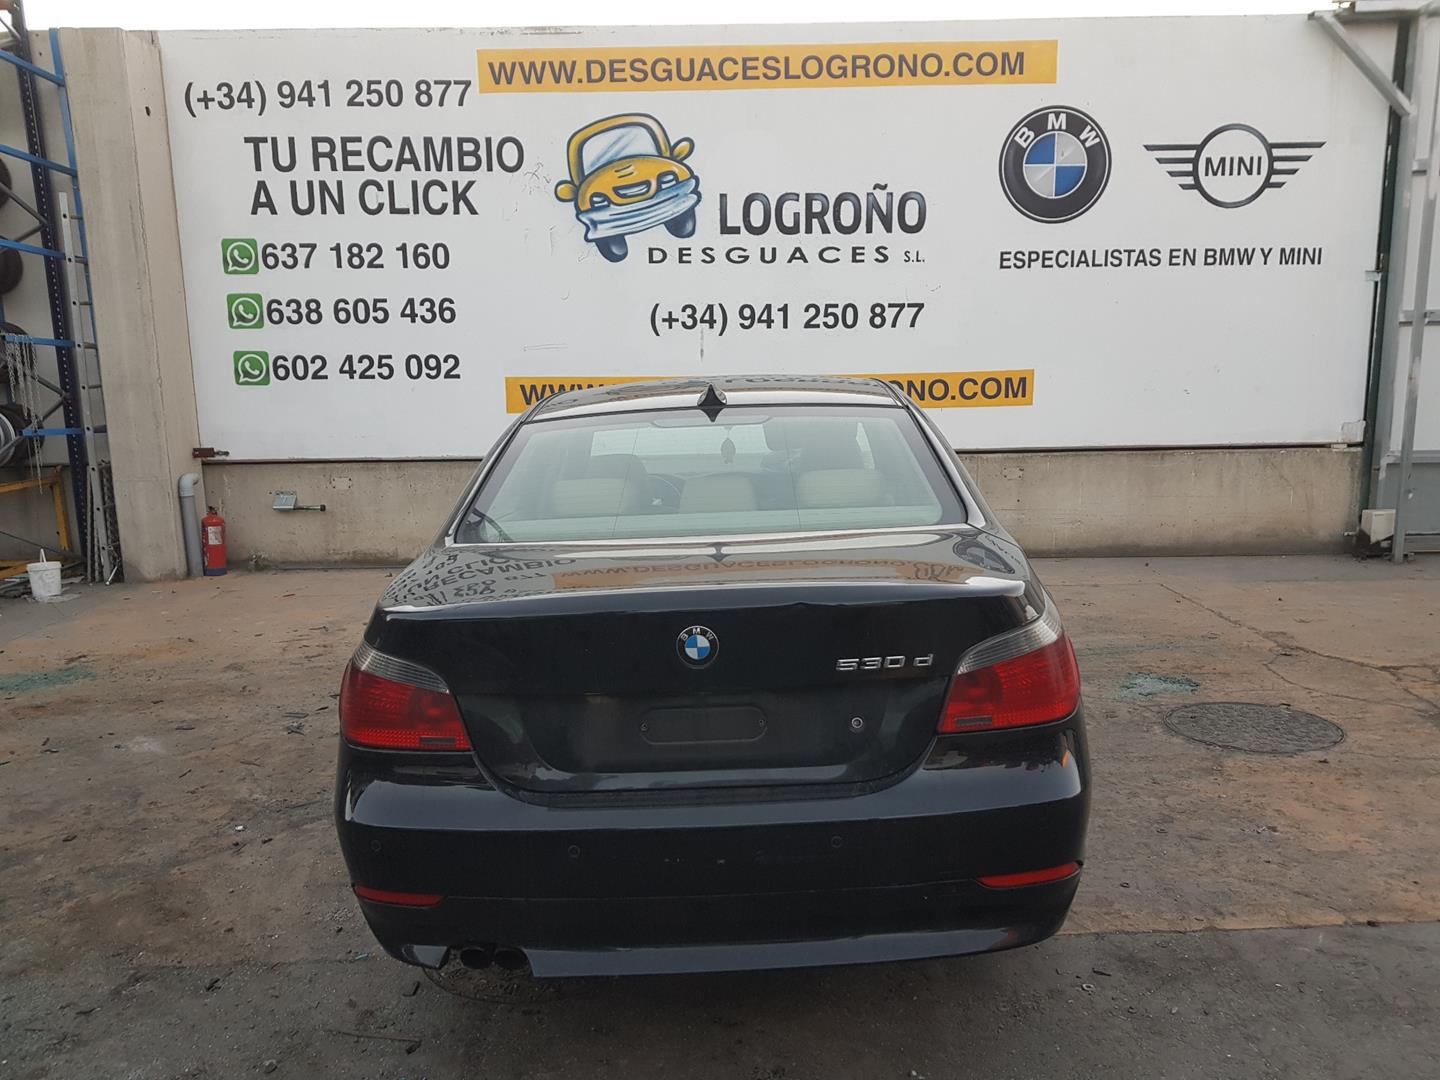 BMW 5 Series E60/E61 (2003-2010) Rear Left Door 41527202341, 41527202341, NEGRO668 19786343